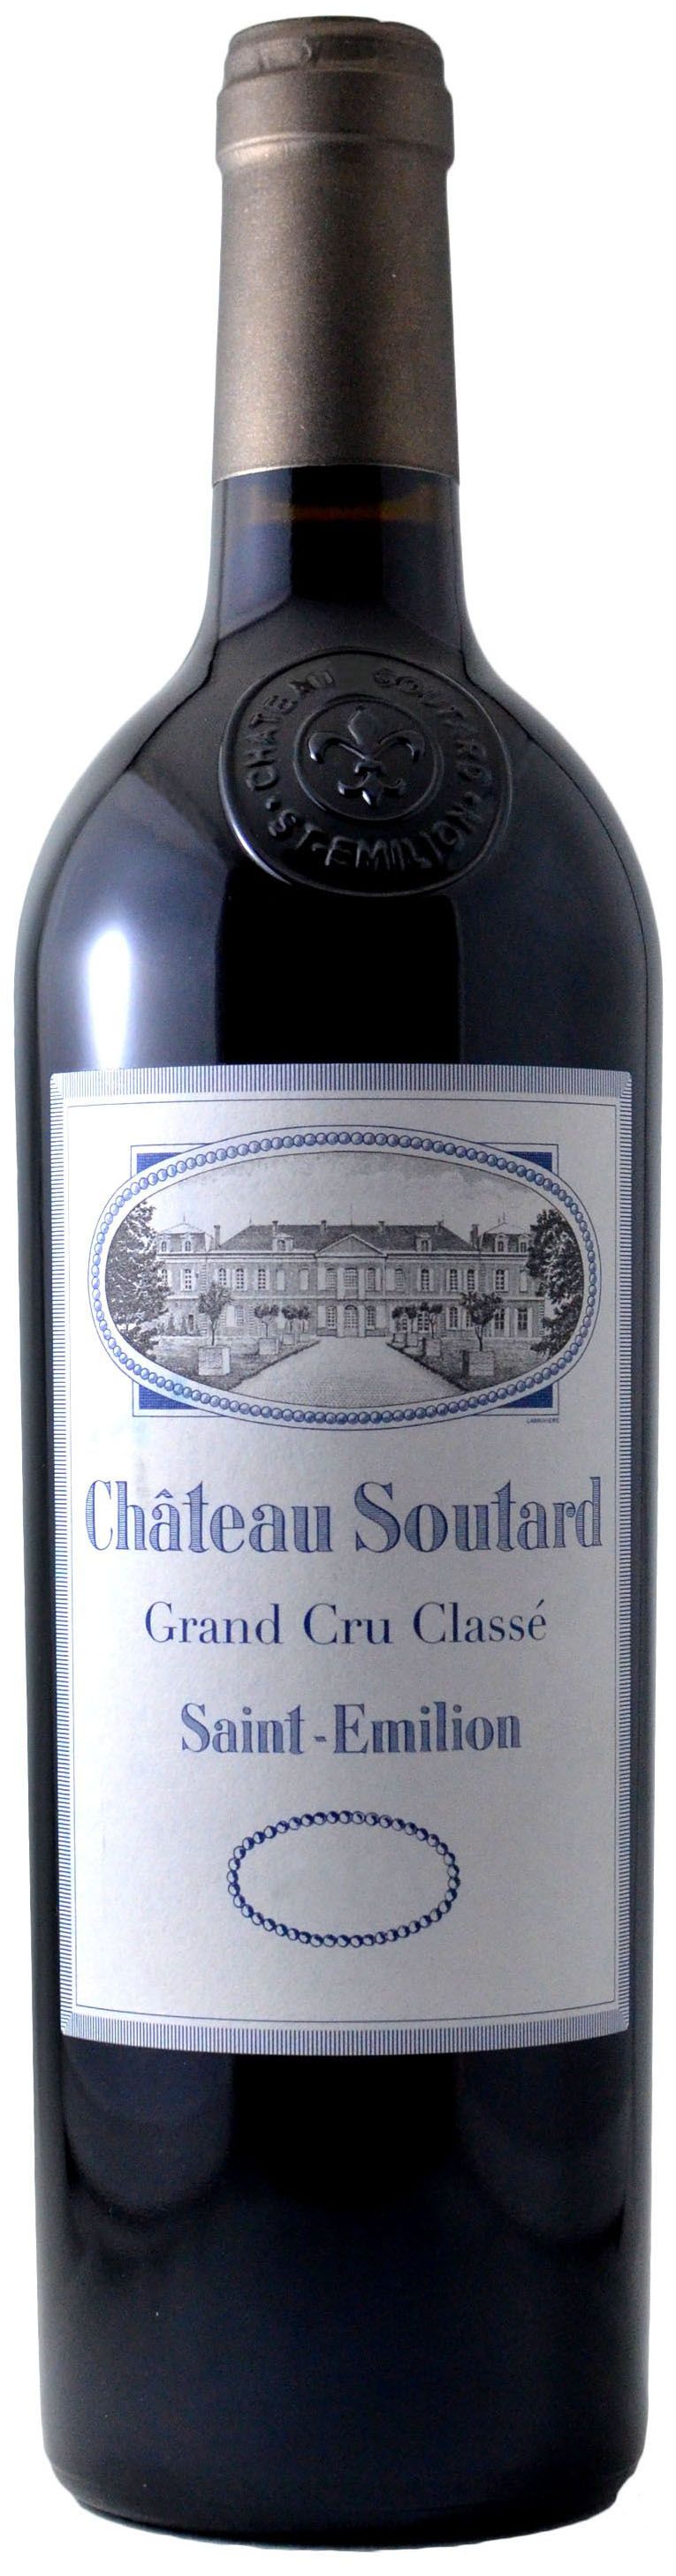 Chateau Soutard, 2005